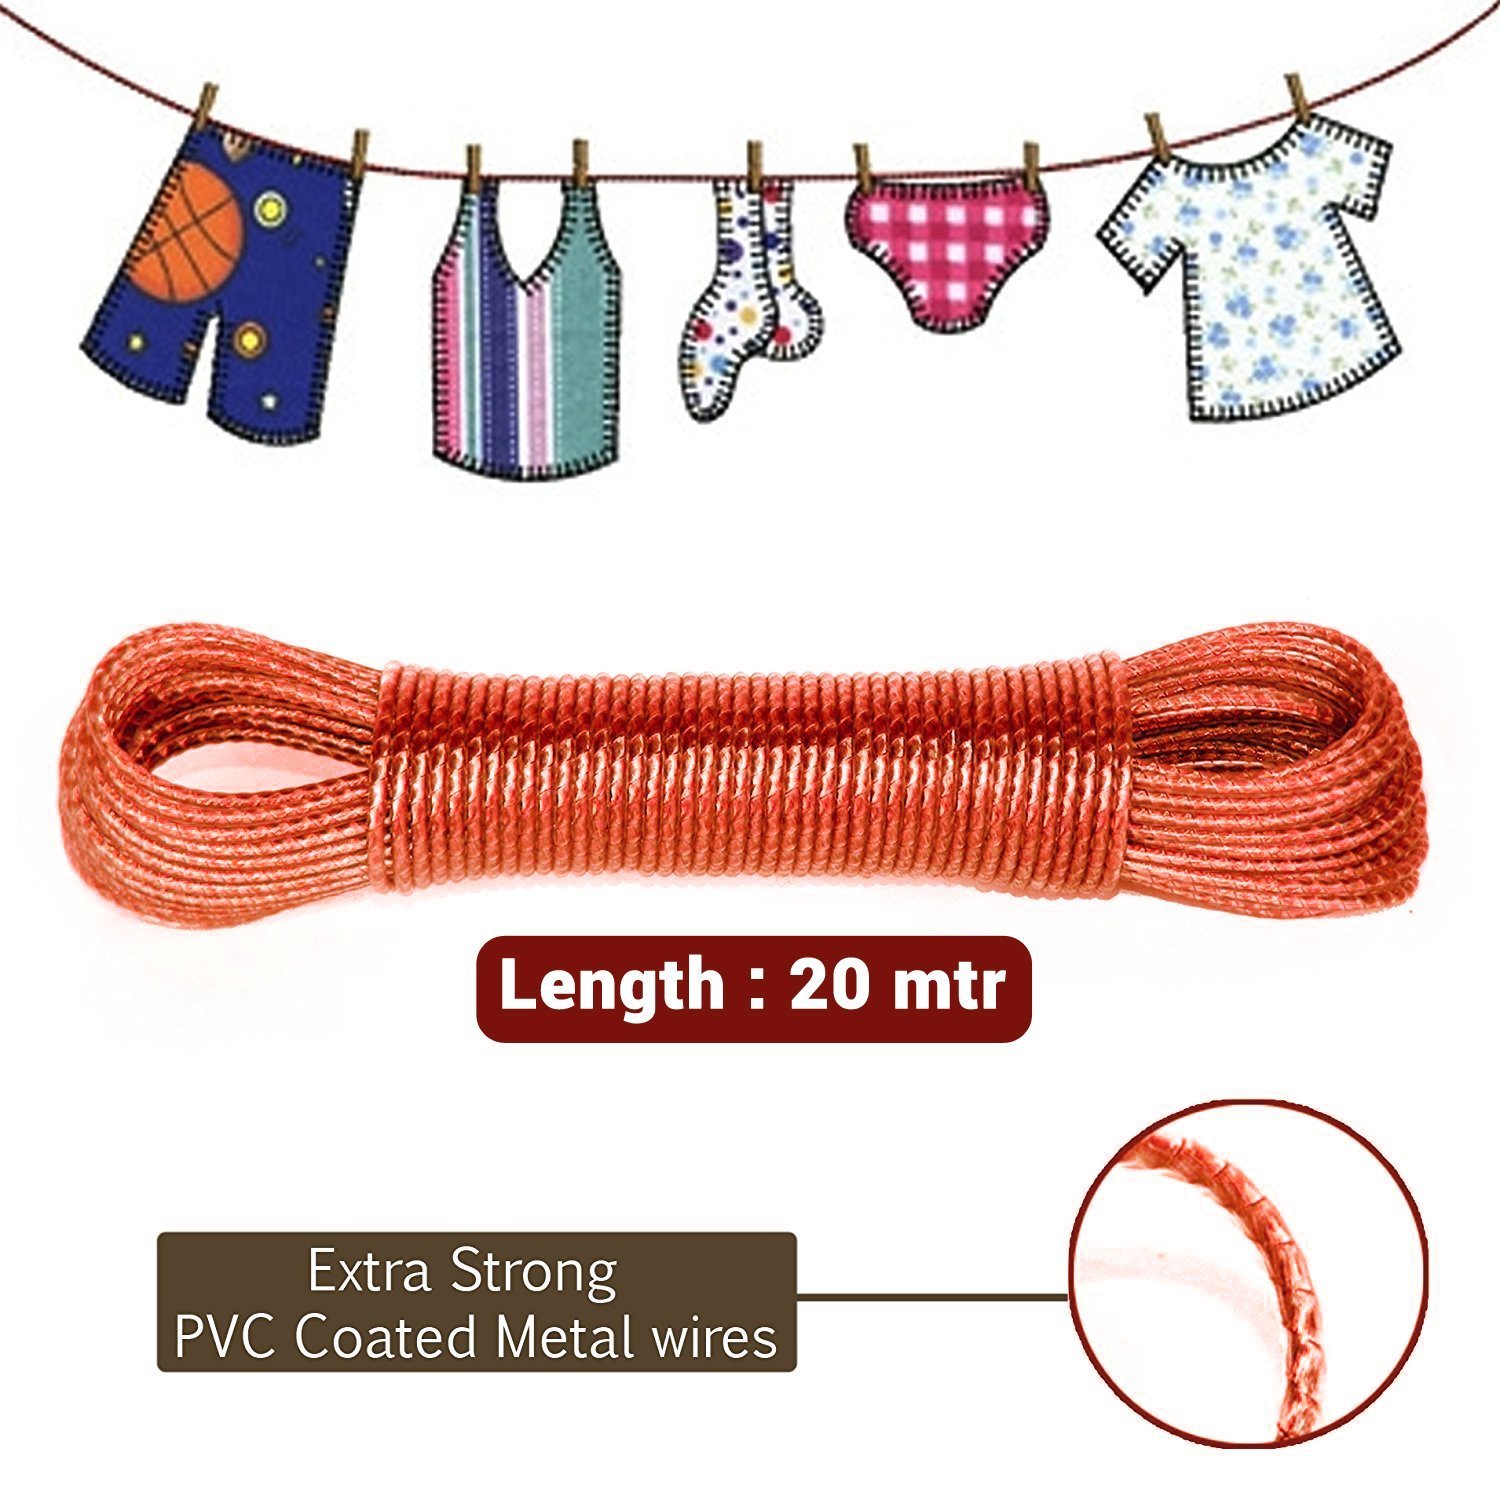 20 mteres Clothine rope, Wet Cloth Laundry Rope Pvc Coated Metal